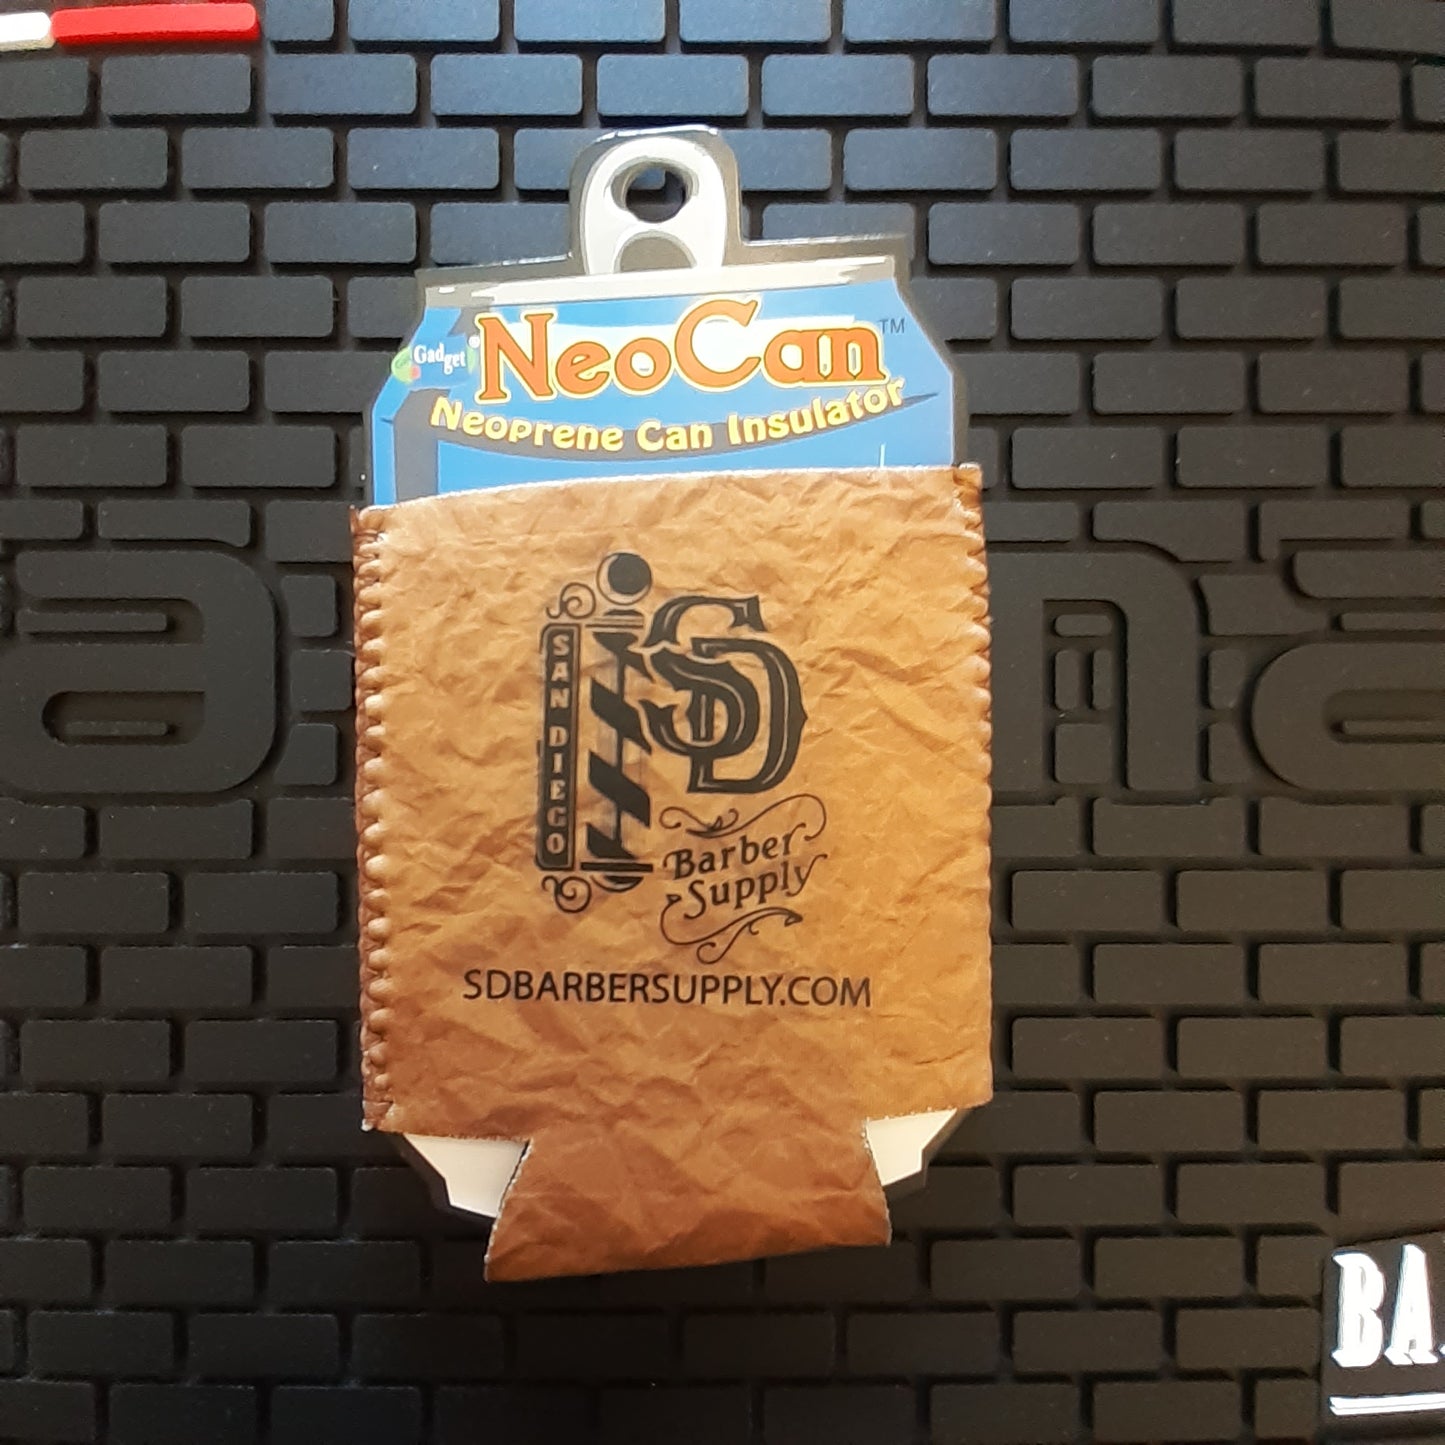 NeoCan Neoprene Can Insulator